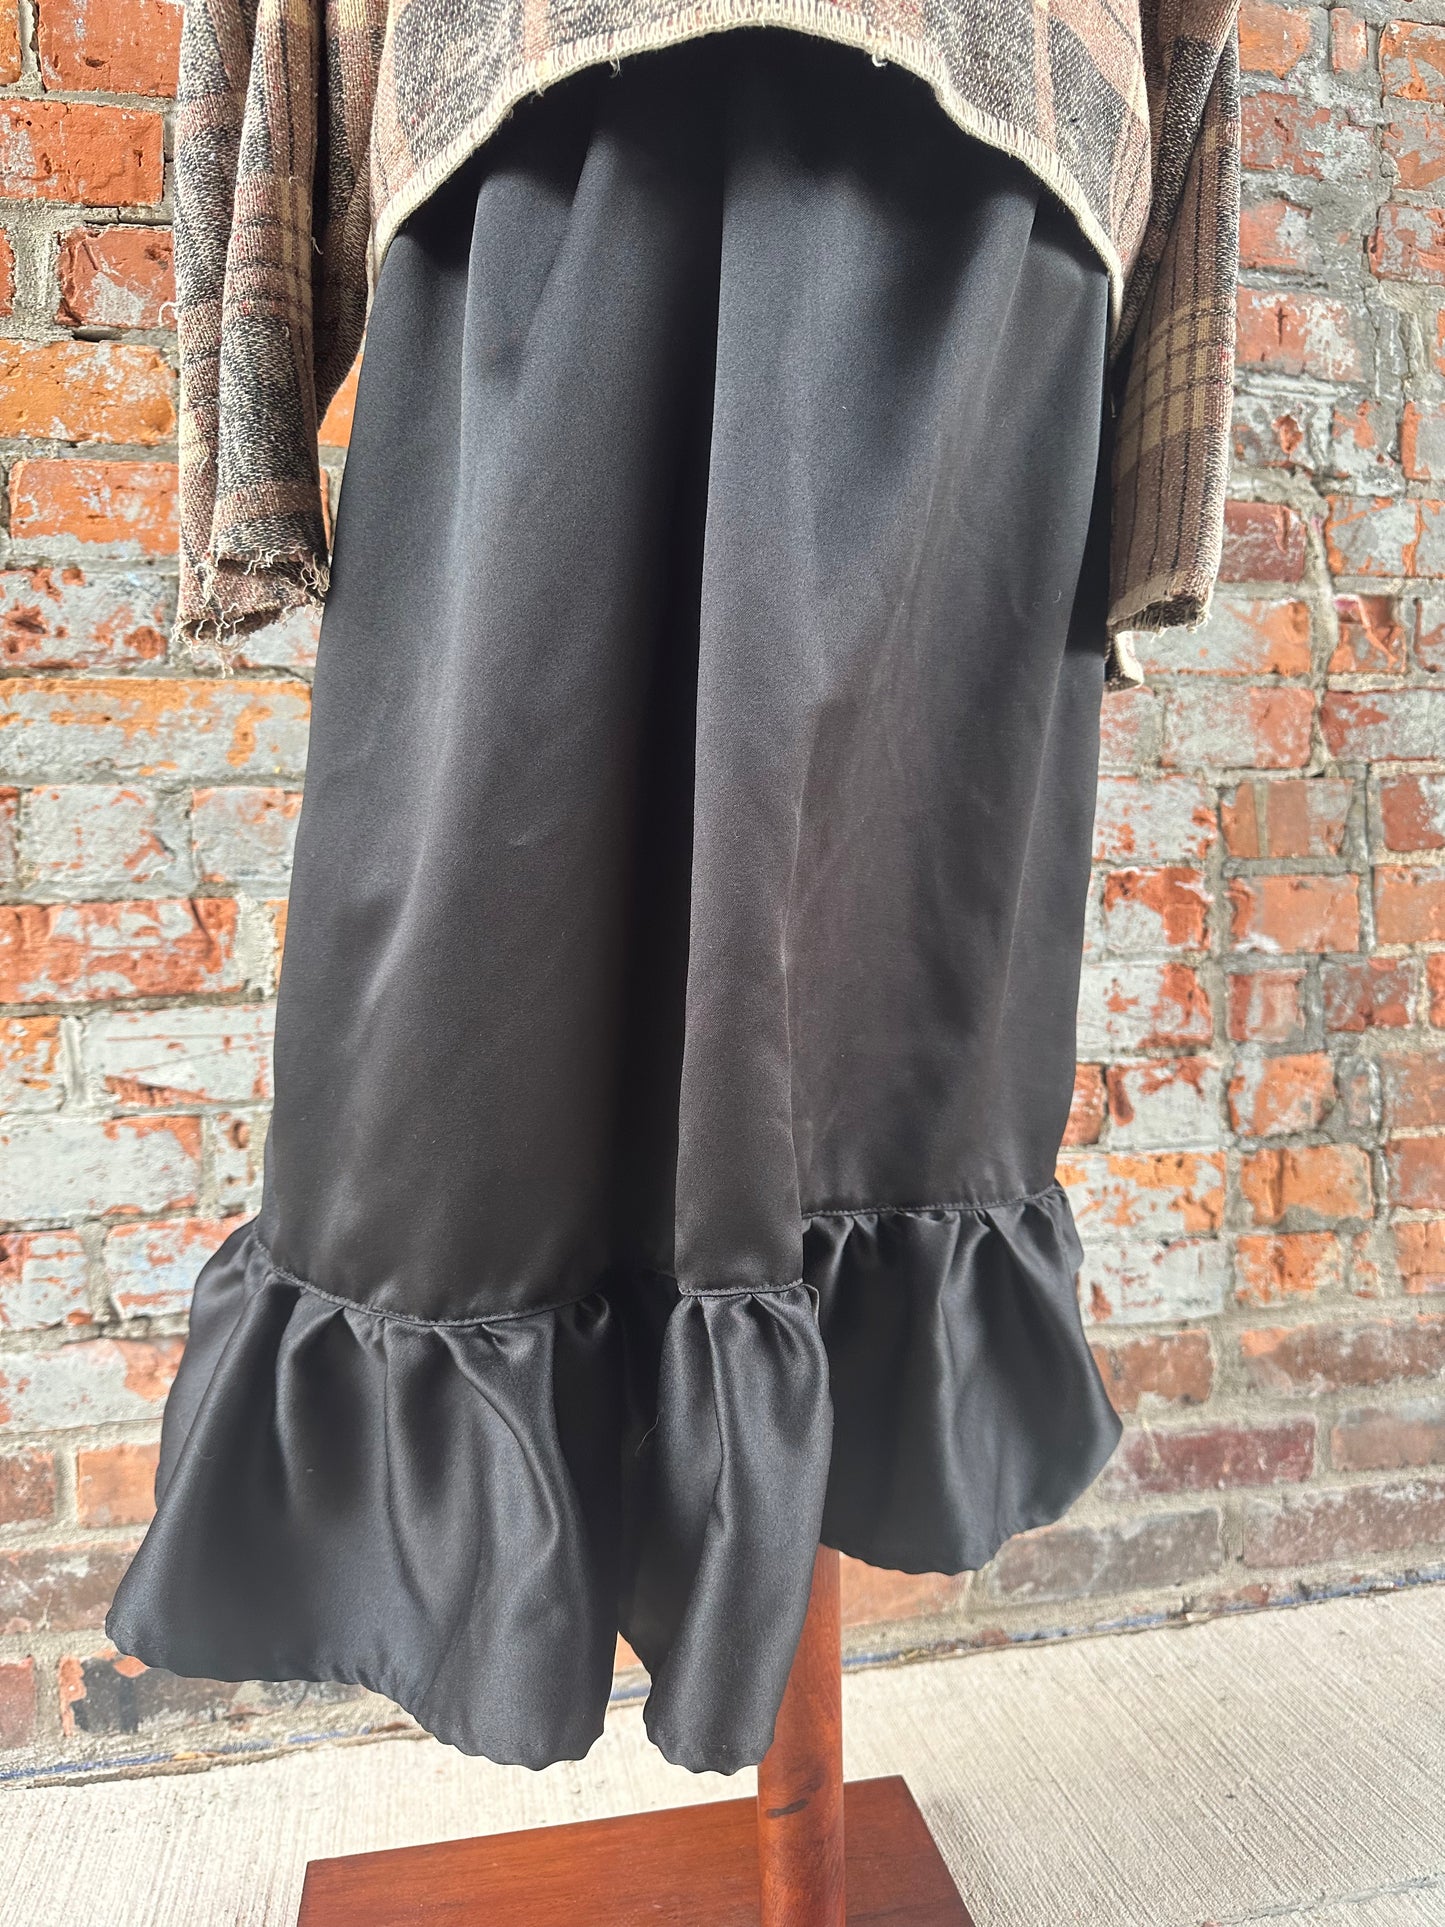 Black Satin Puckered Skirt